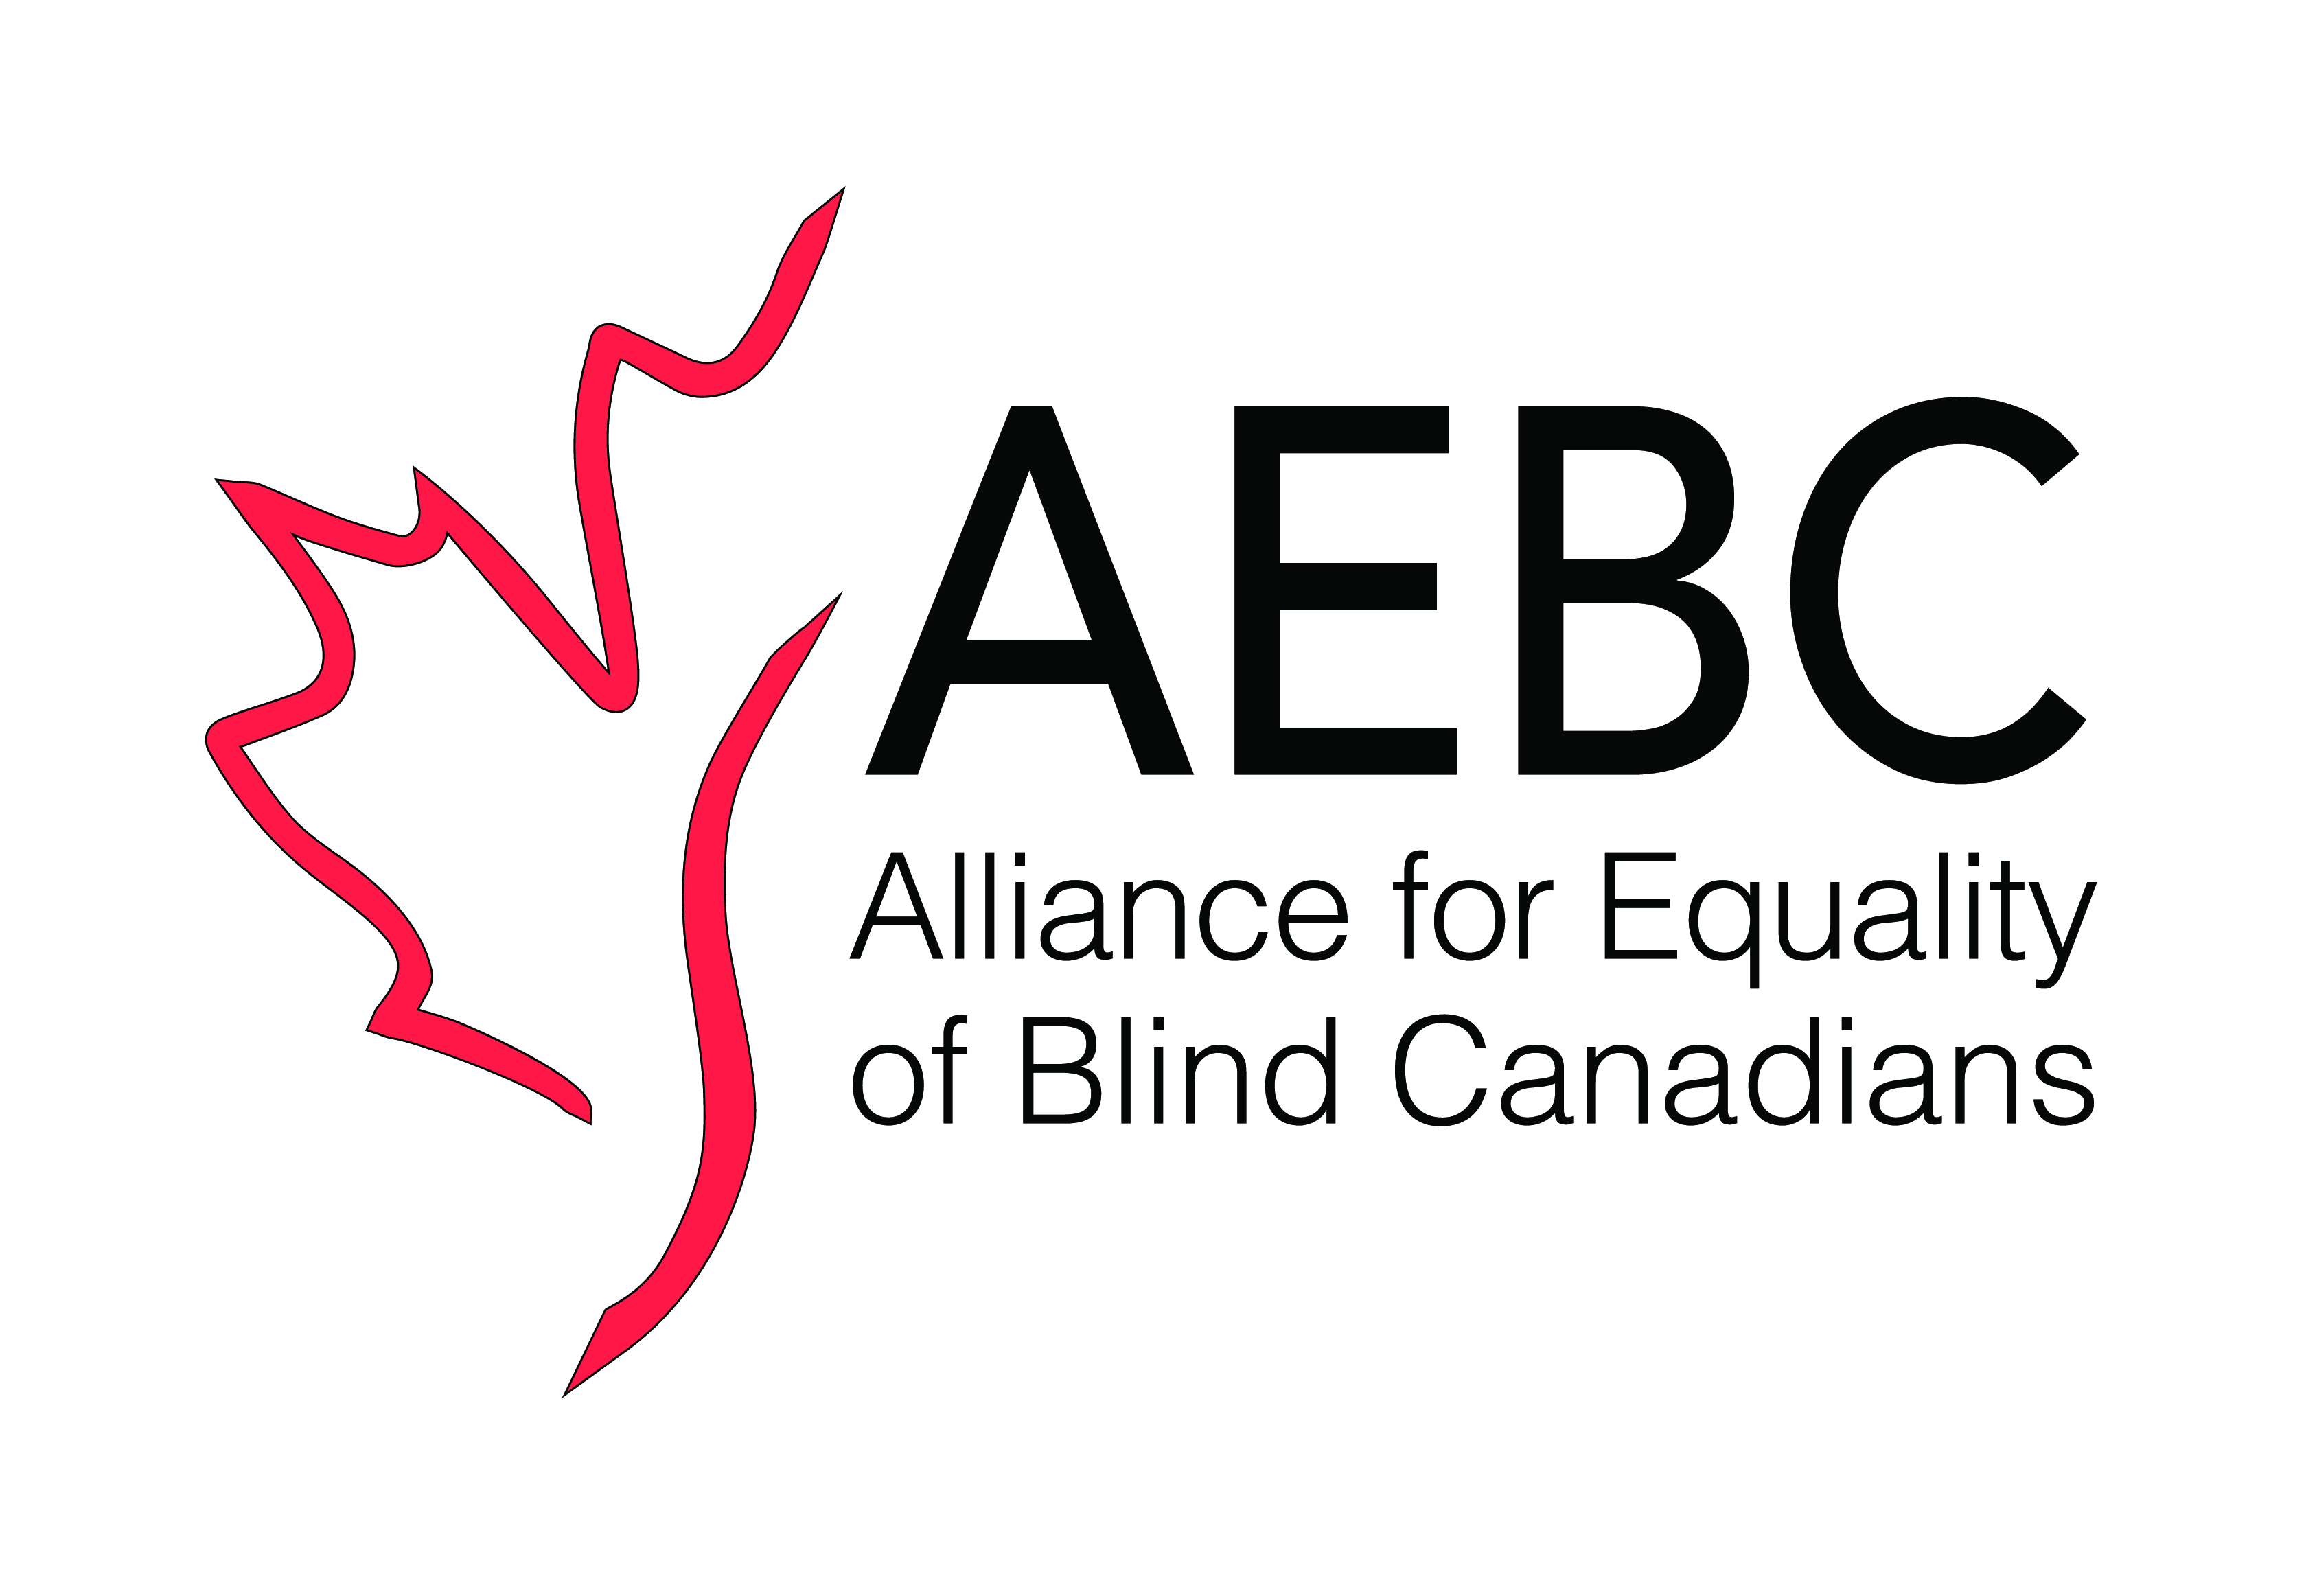 Alliance for Equality of Blind Canadians logo